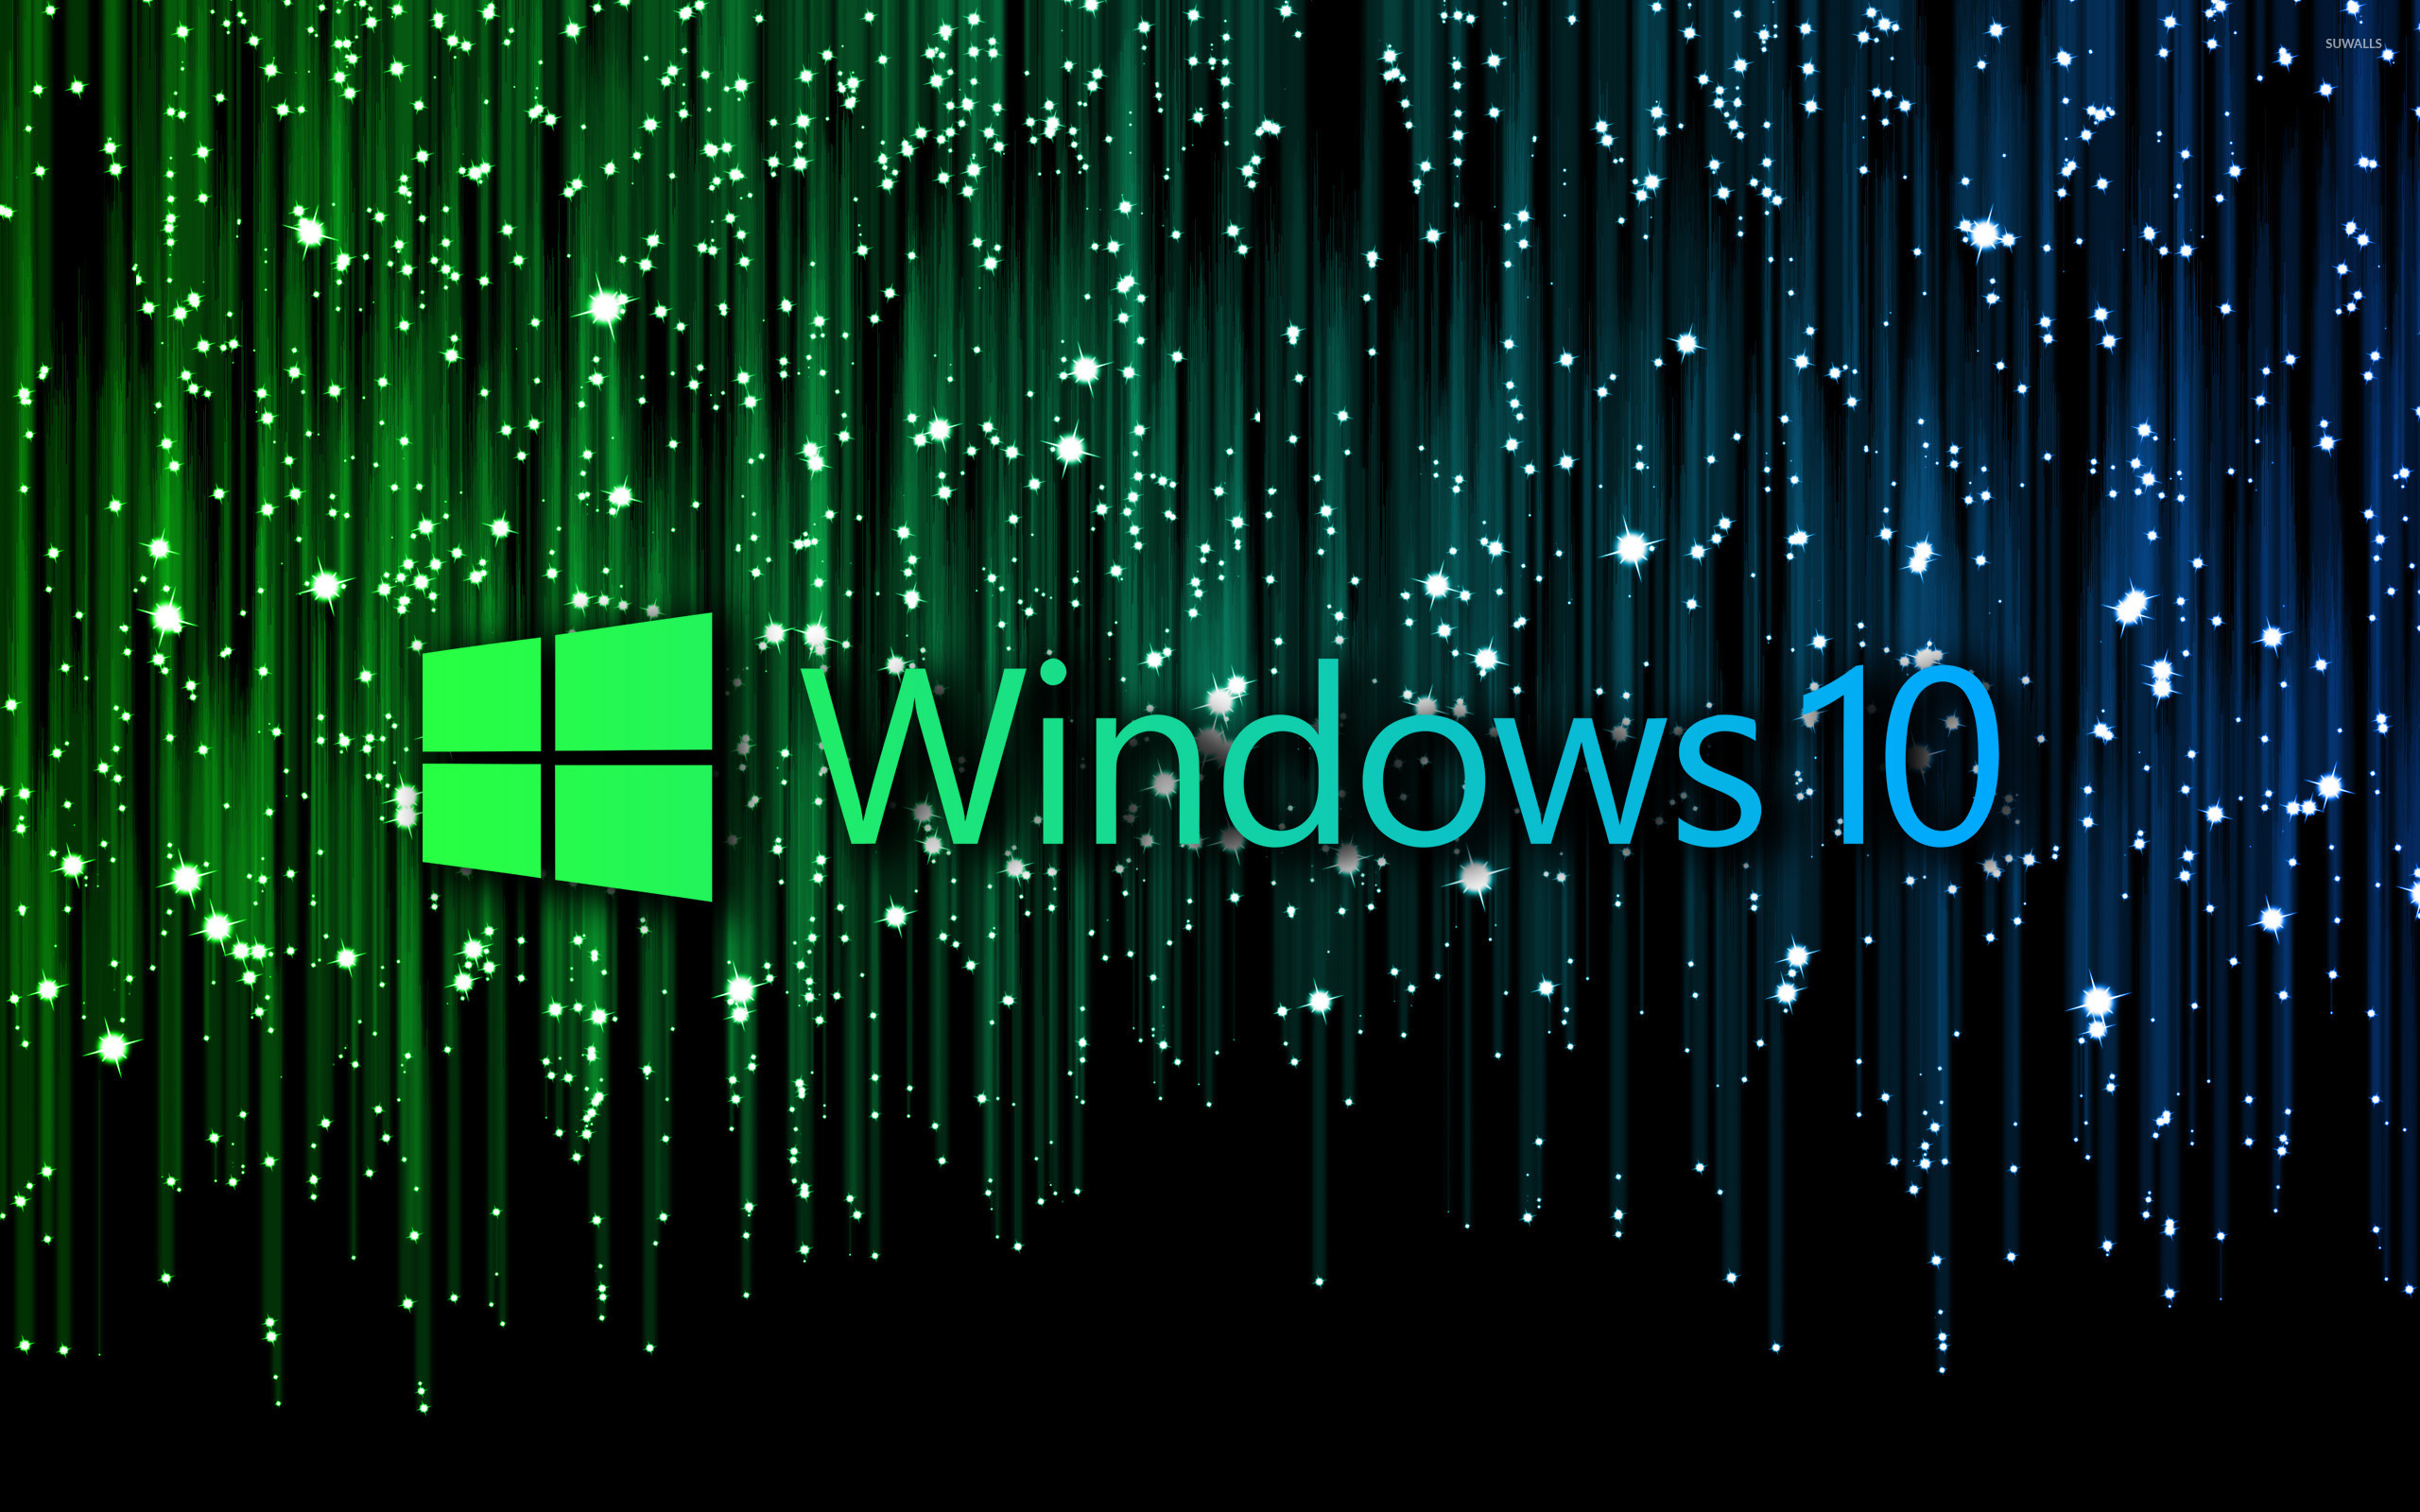 Windows Text Logo On Meteor Shower Wallpaper Puter